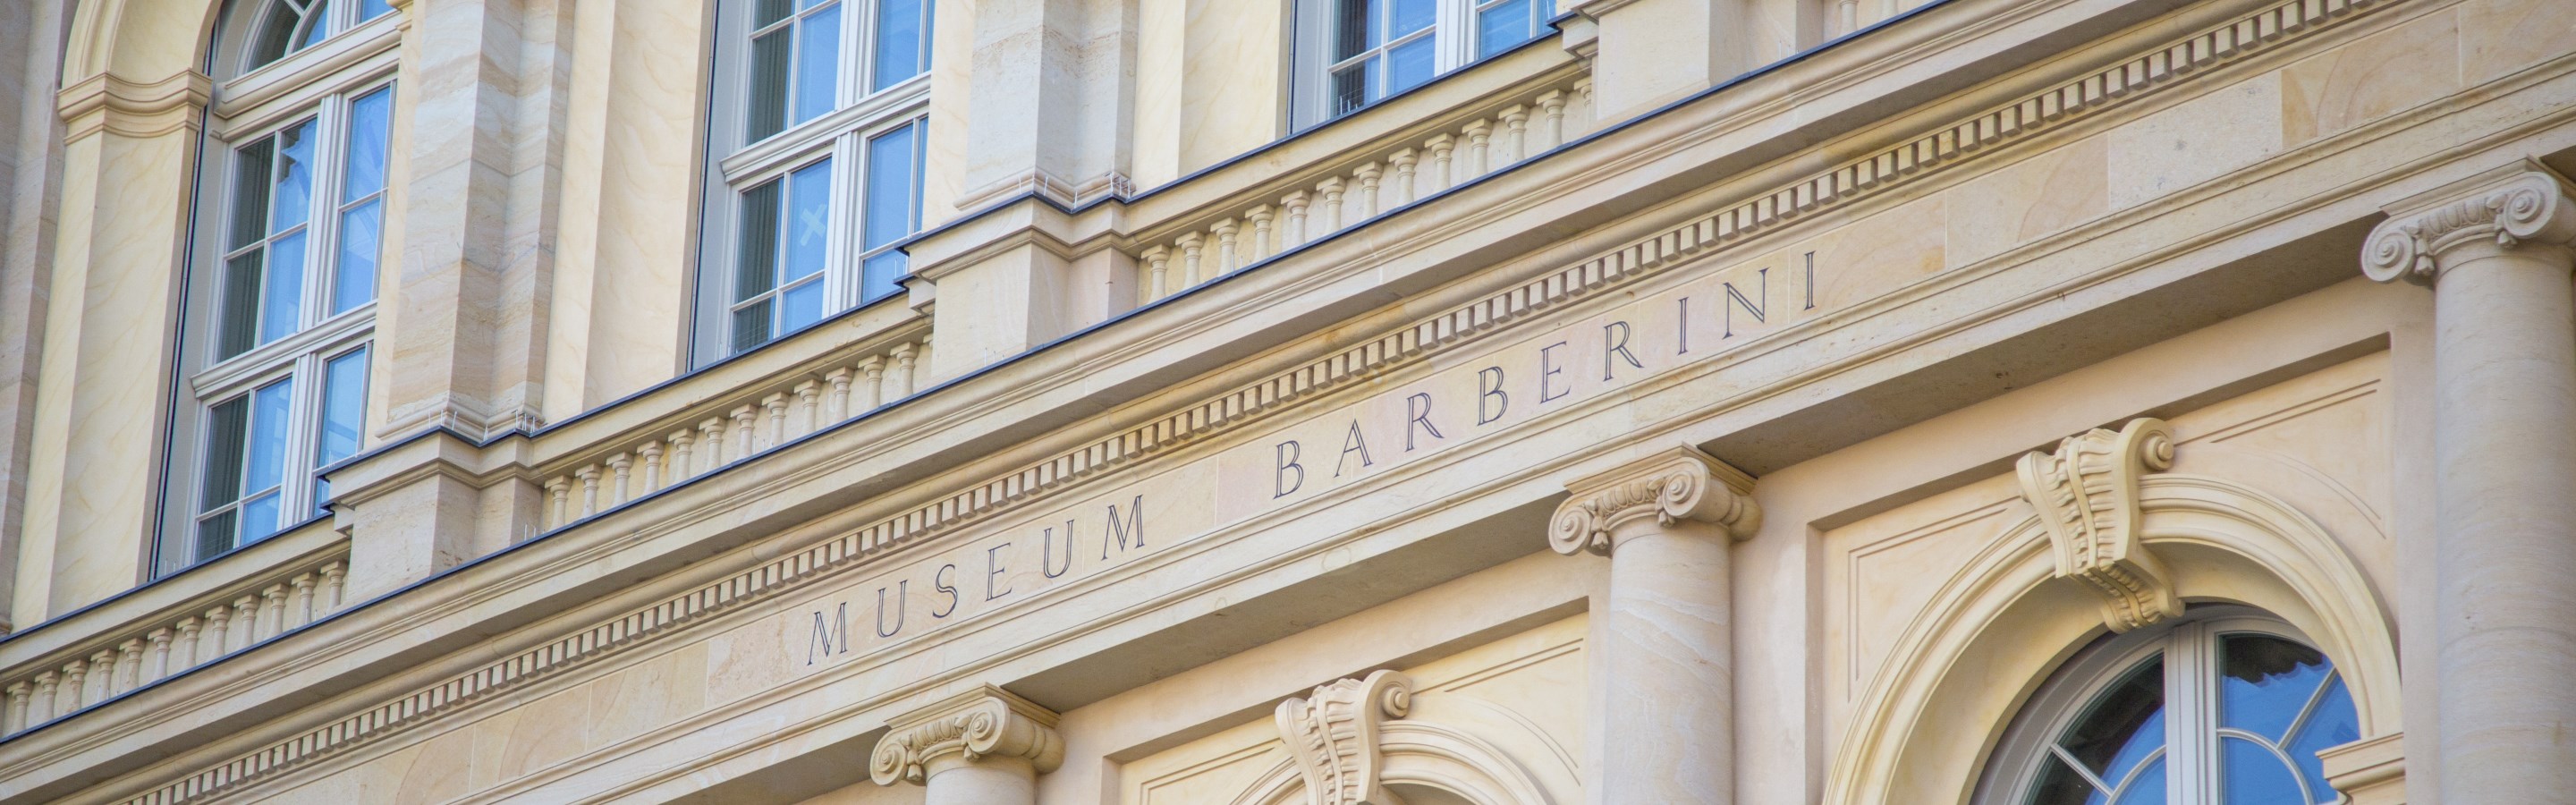 Museum Barberini: Neues Kunstmuseum der Extraklasse